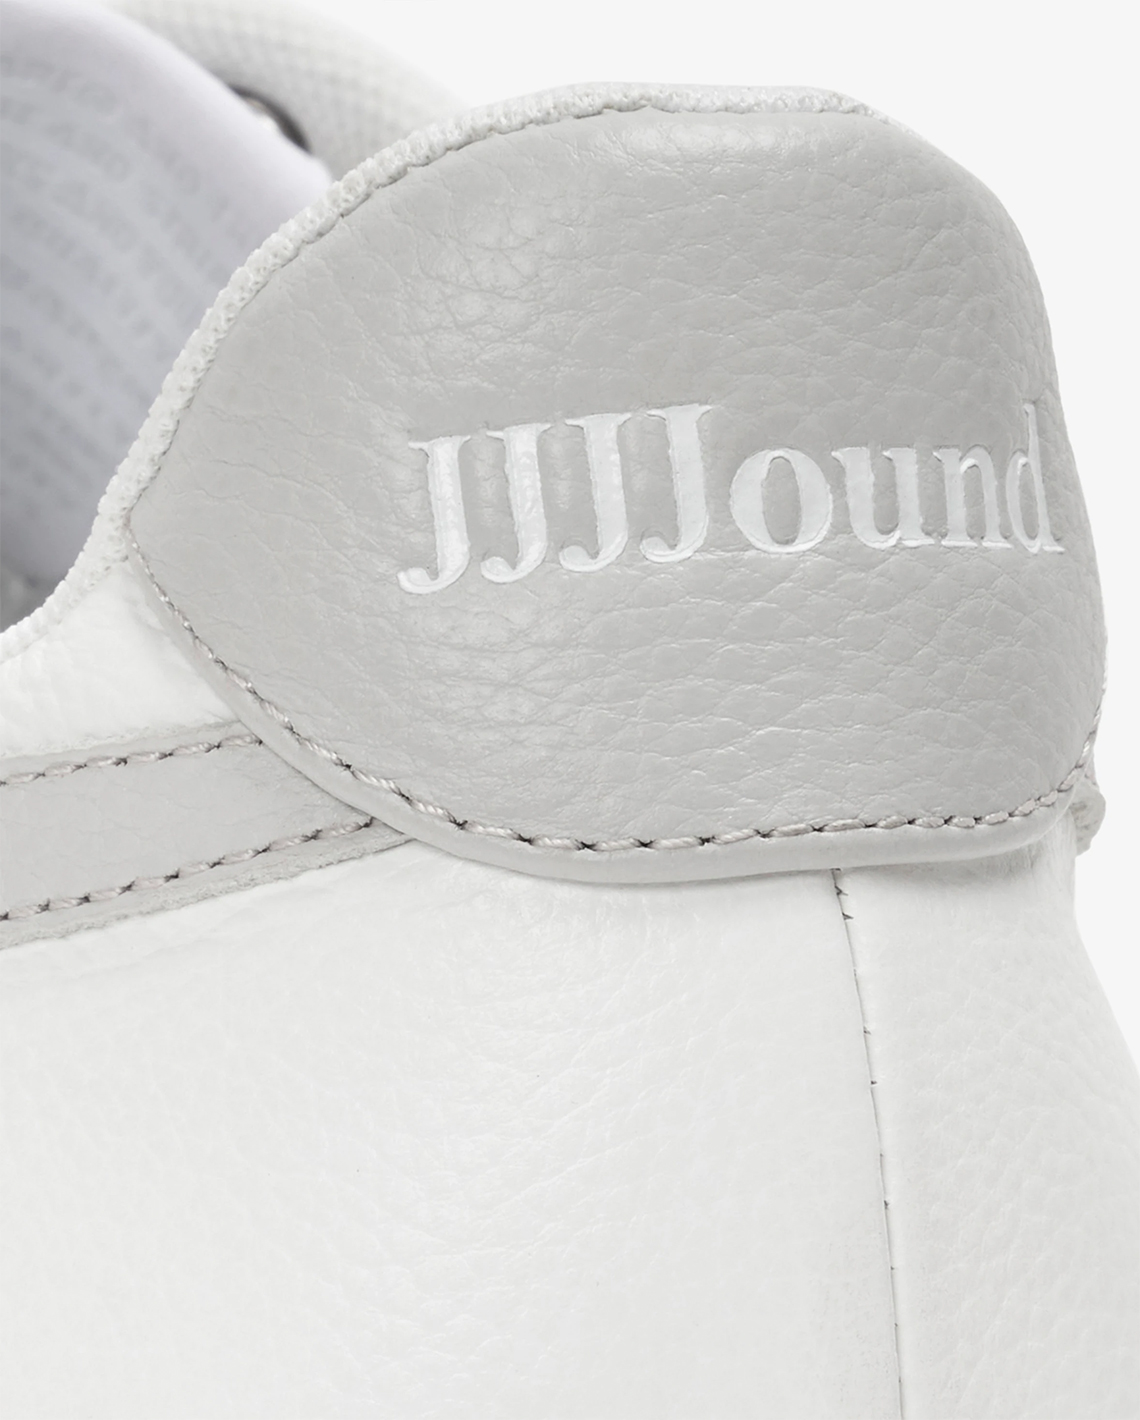 Jjjjound Nike Blazer Mid 77 Jumbo Sail Purple DO8909-167 Side White Grey Release Date 10